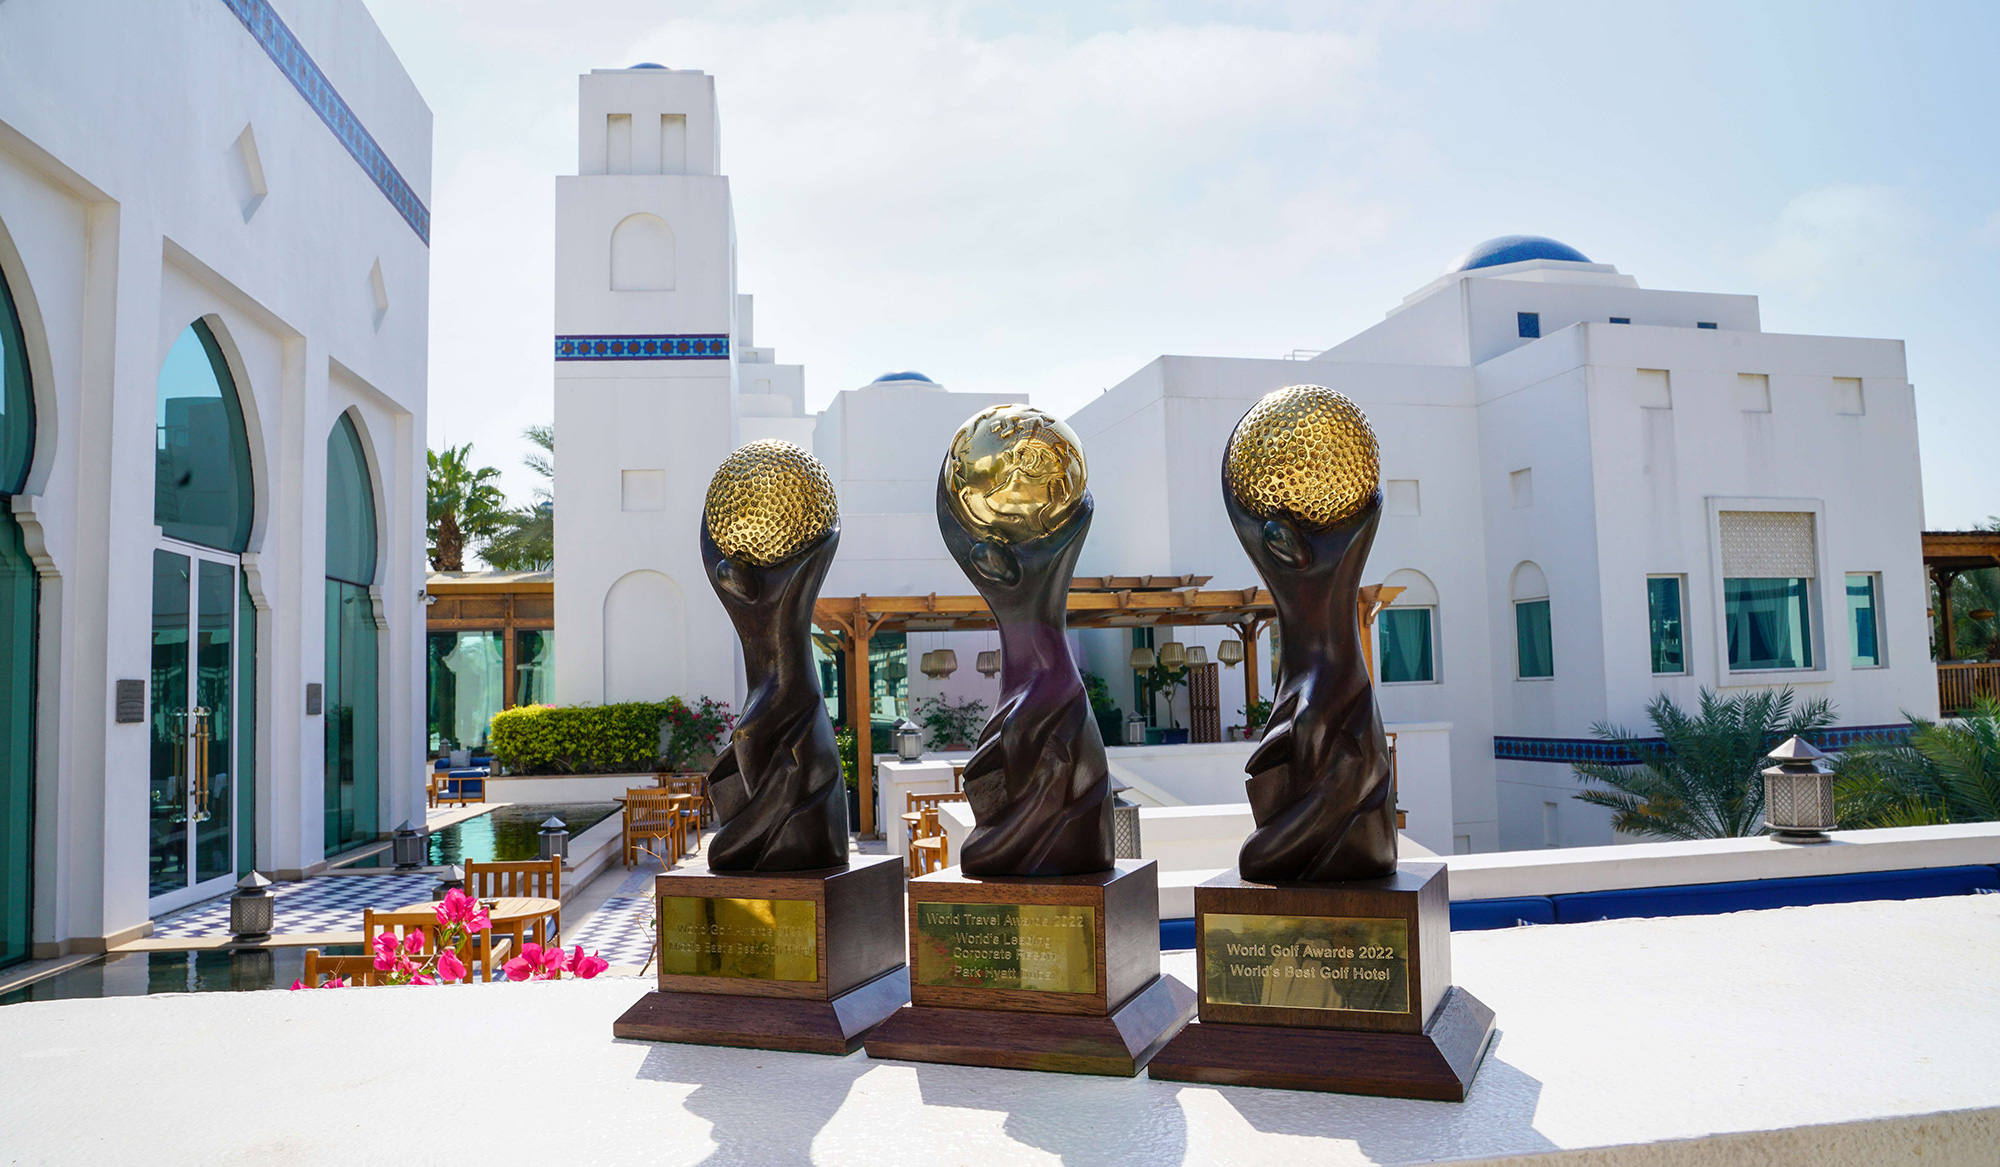  Park Hyatt Dubai wins Big at The World Travel Awards and World Golf Awards 2022!